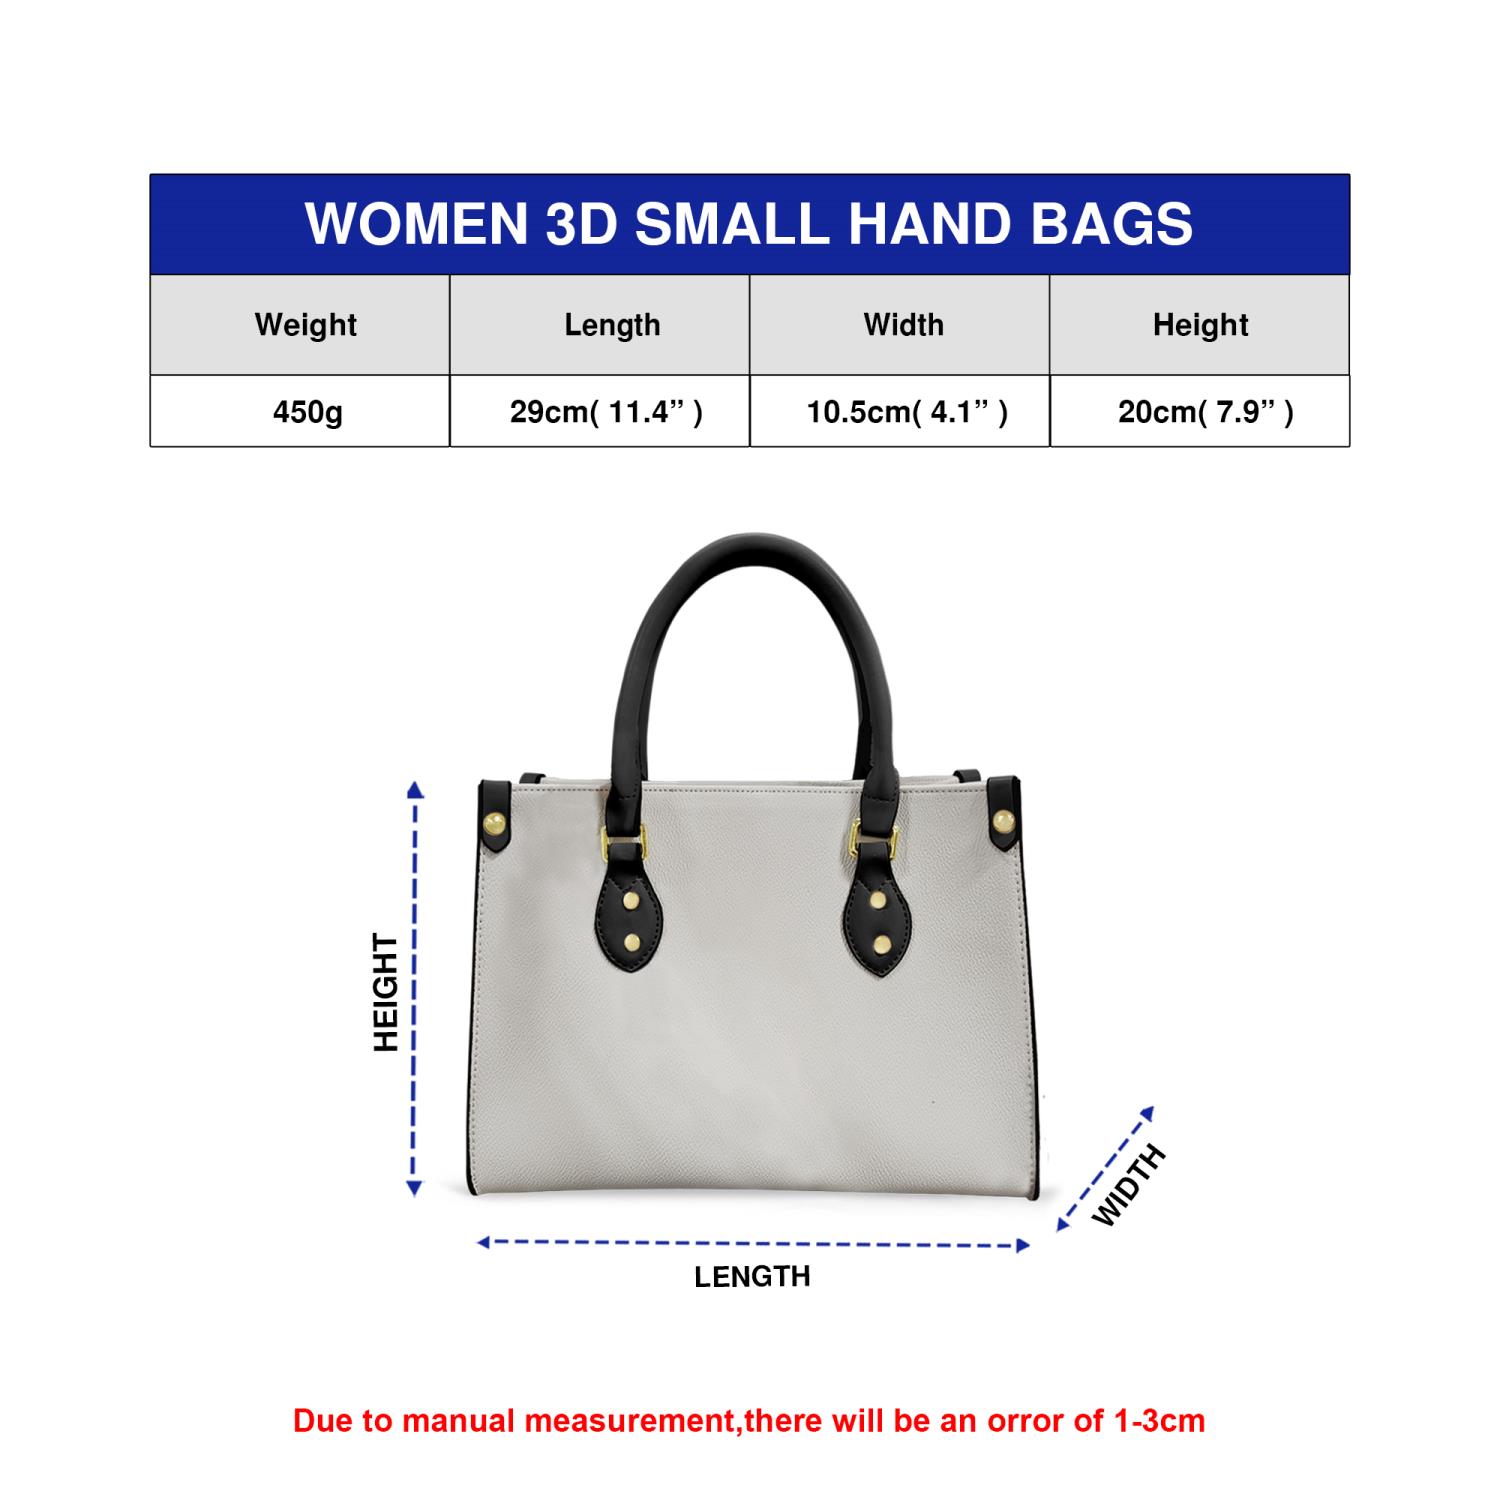 Louisville Cardinals Personalized Diamond Design Women Handbags and Woman  Purse Wallet - Growkoc